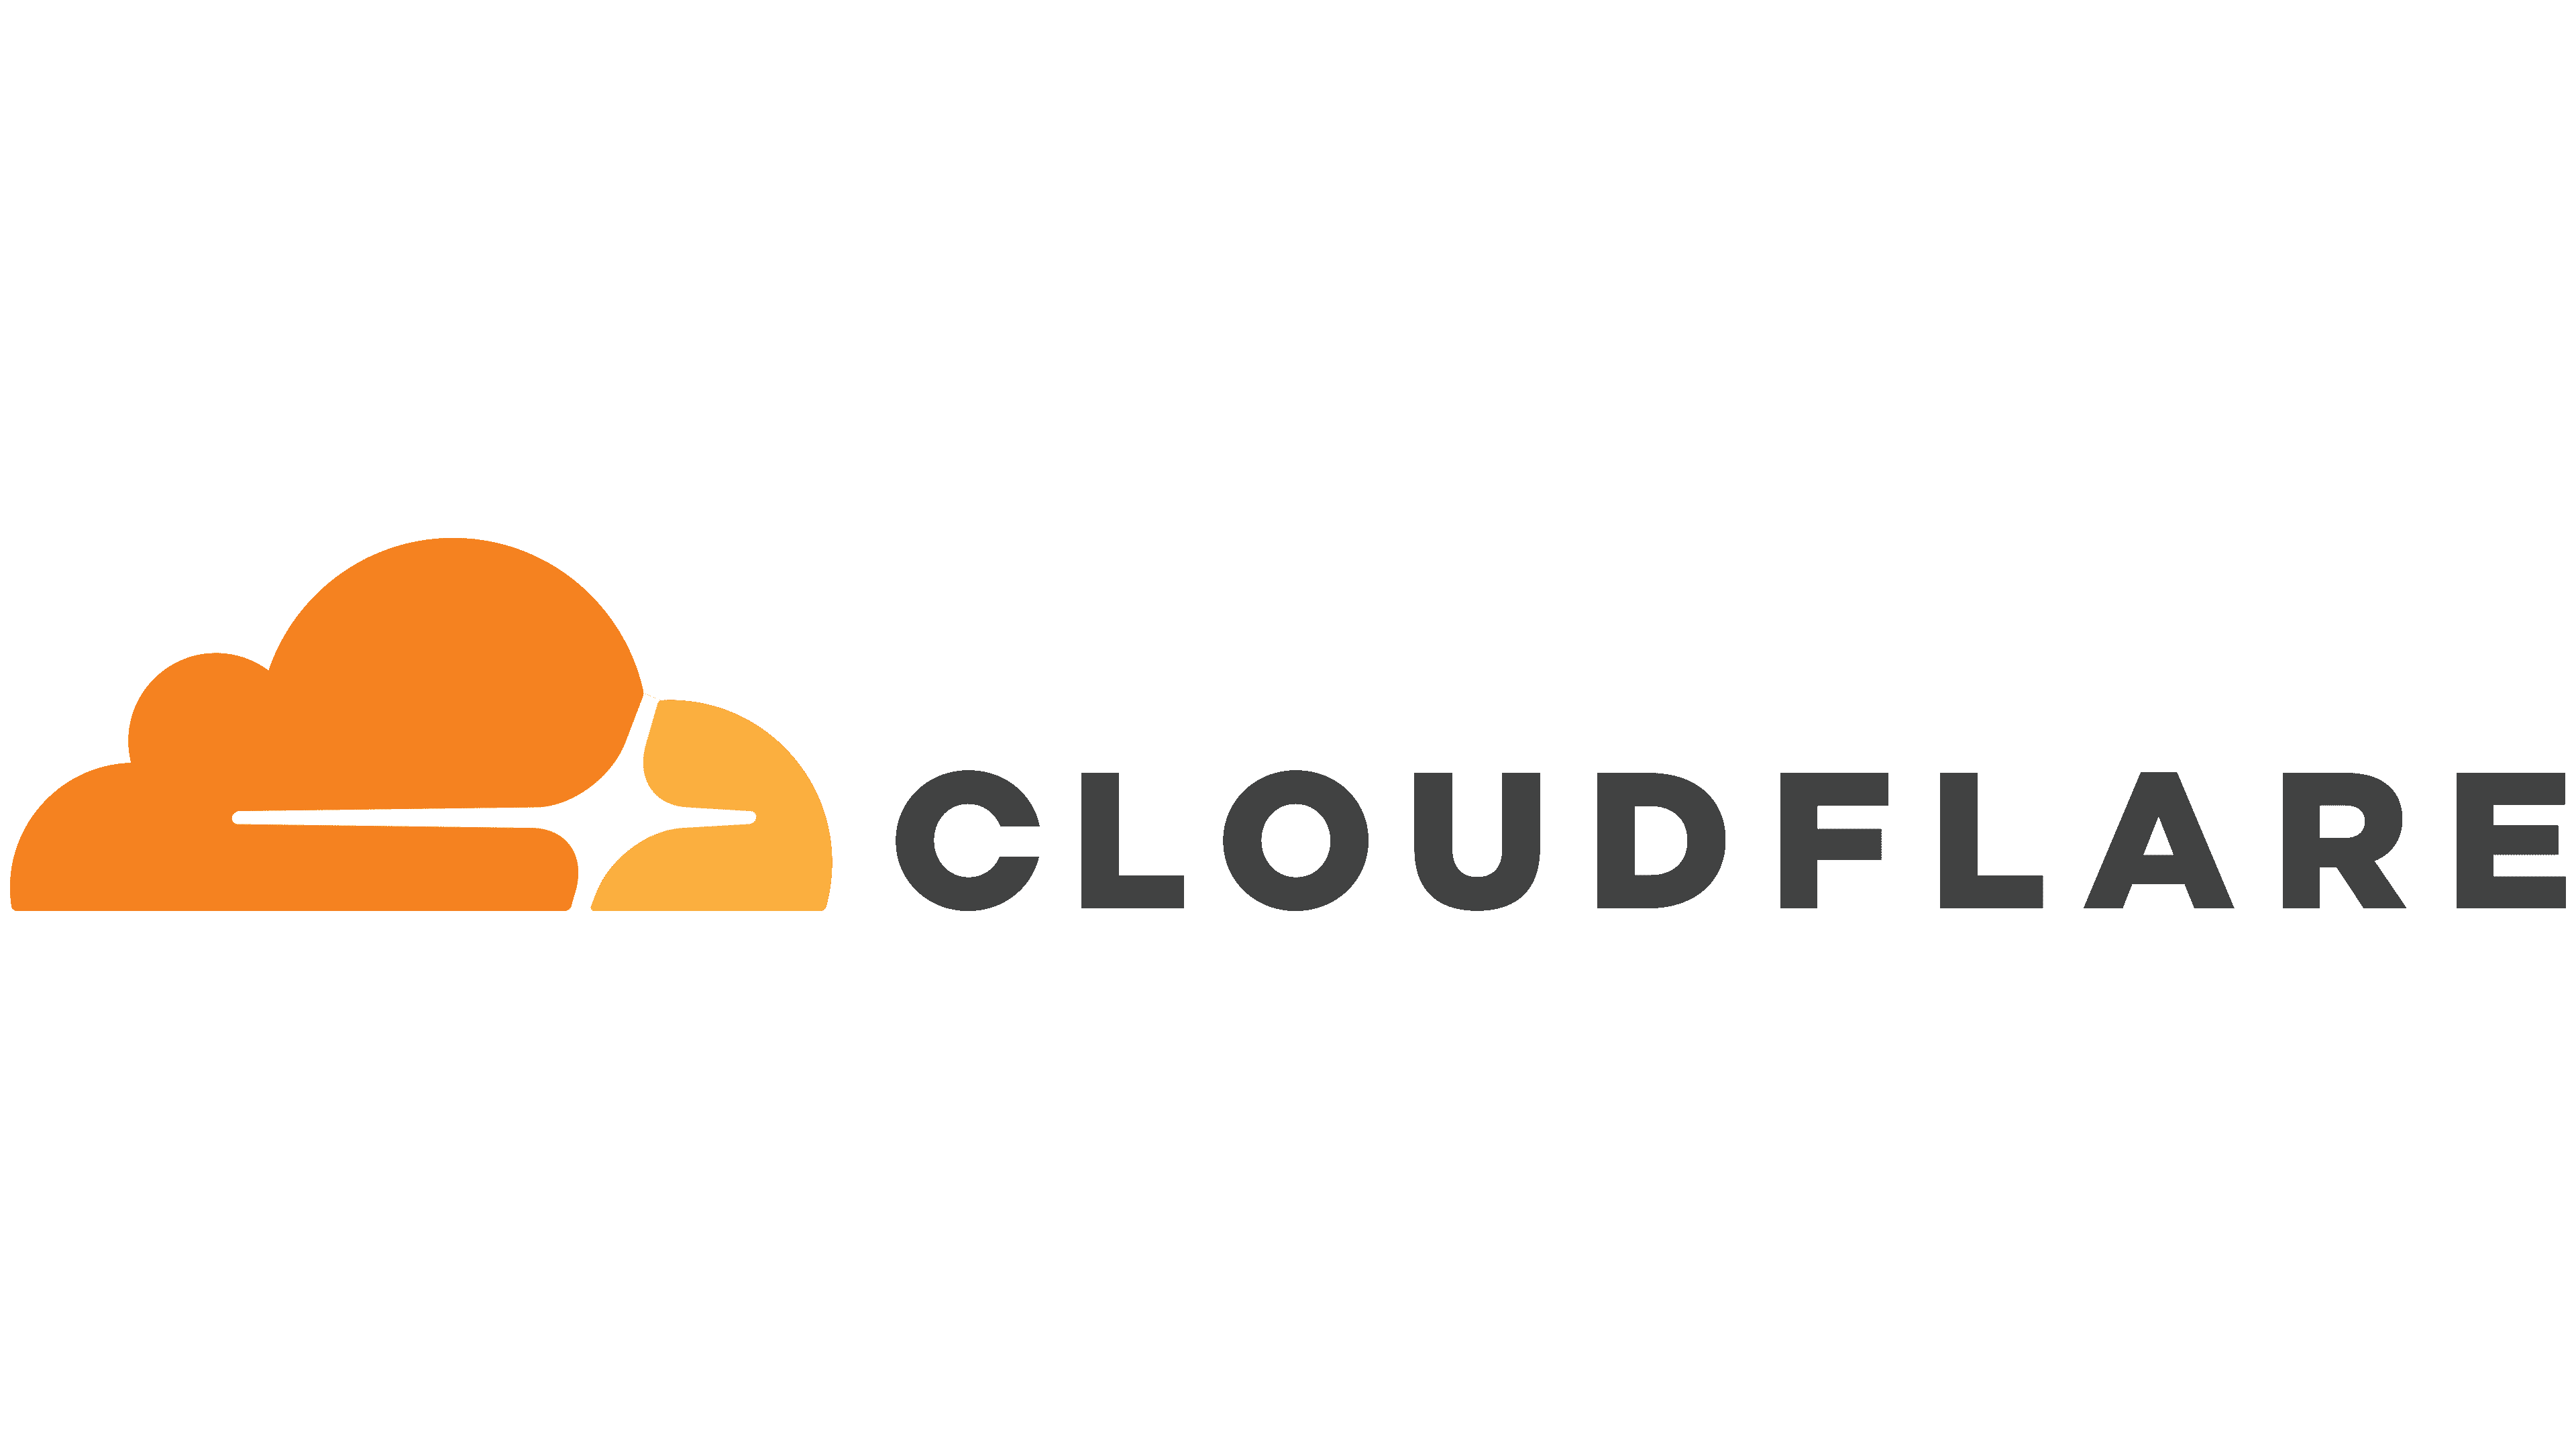 Cloudflare-Setup-Services